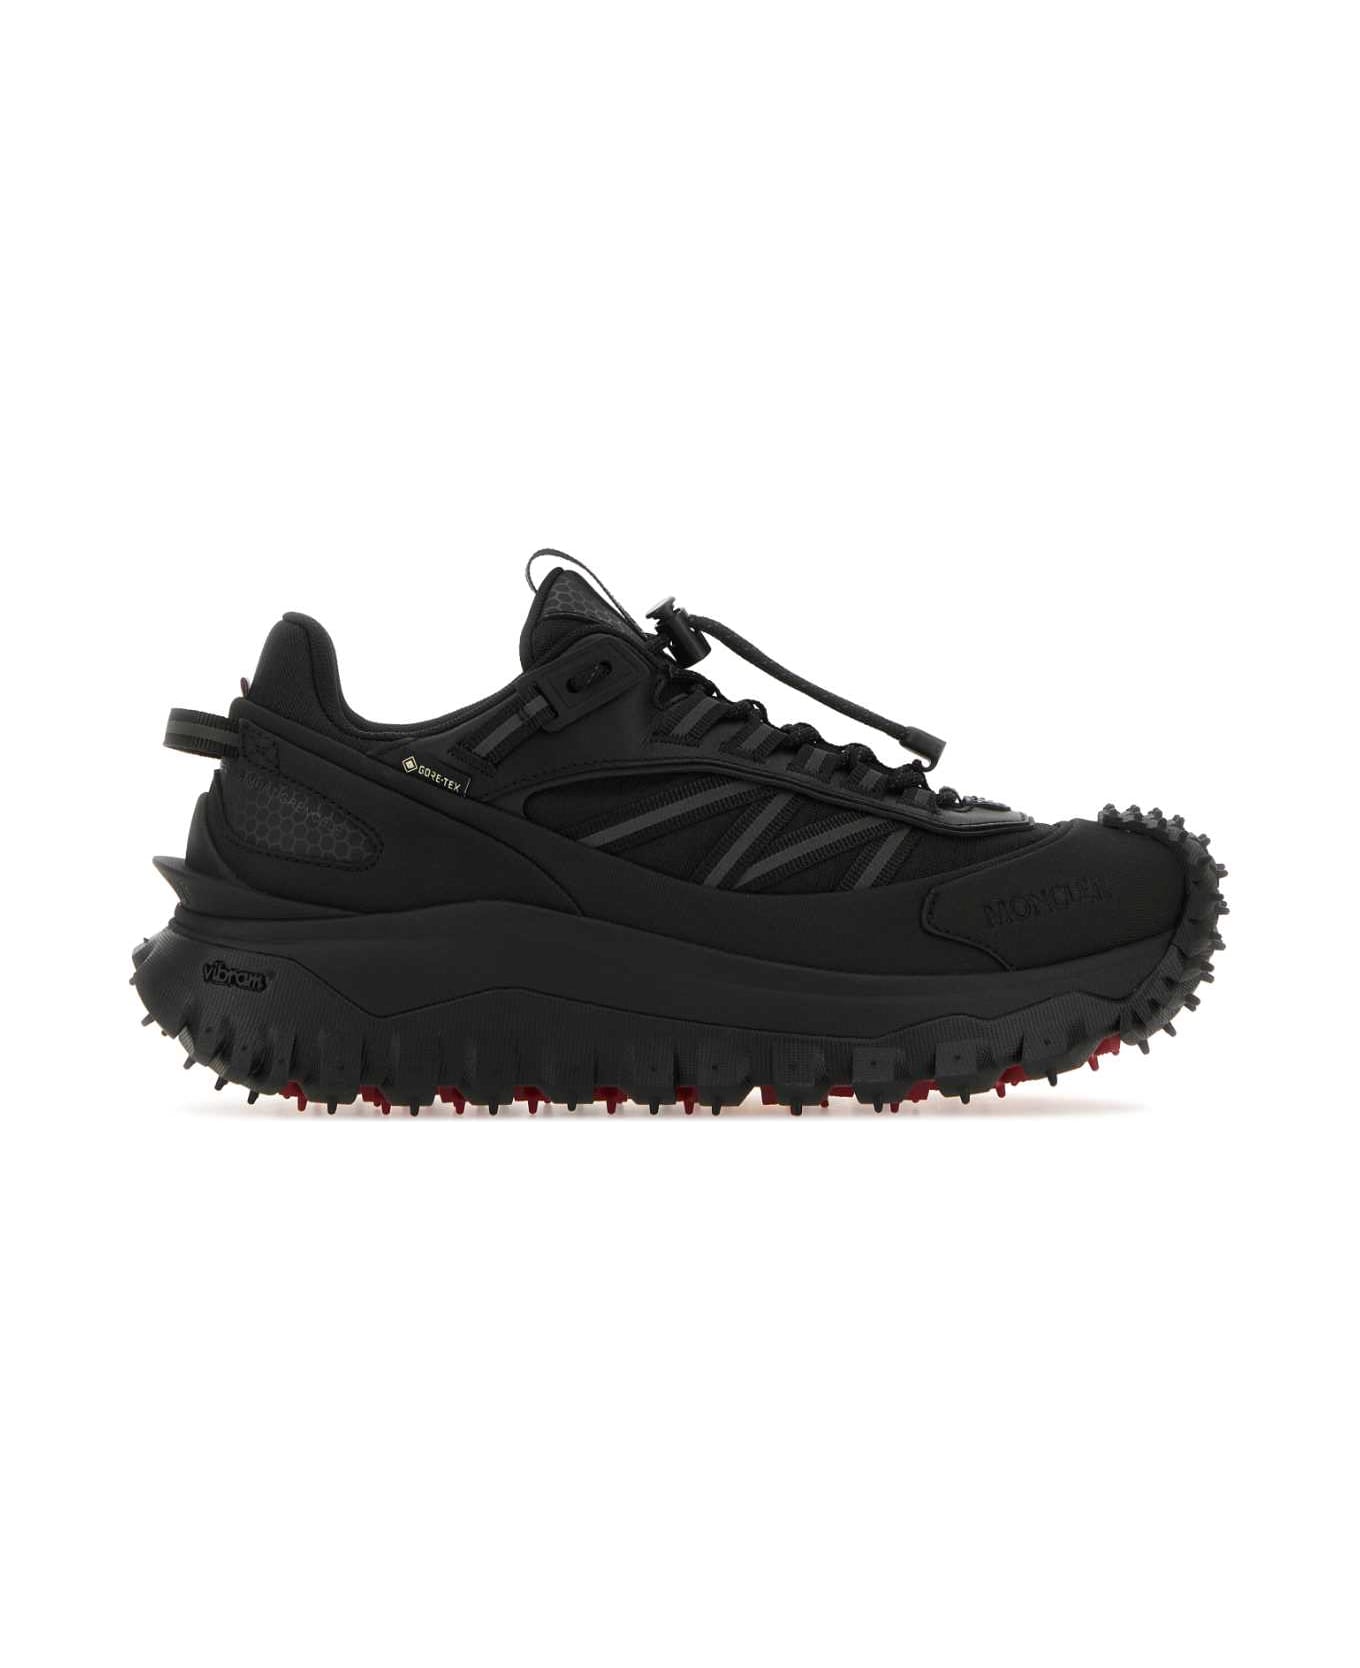 Moncler Black Fabric Trailgrip Gtx Sneakers - 999